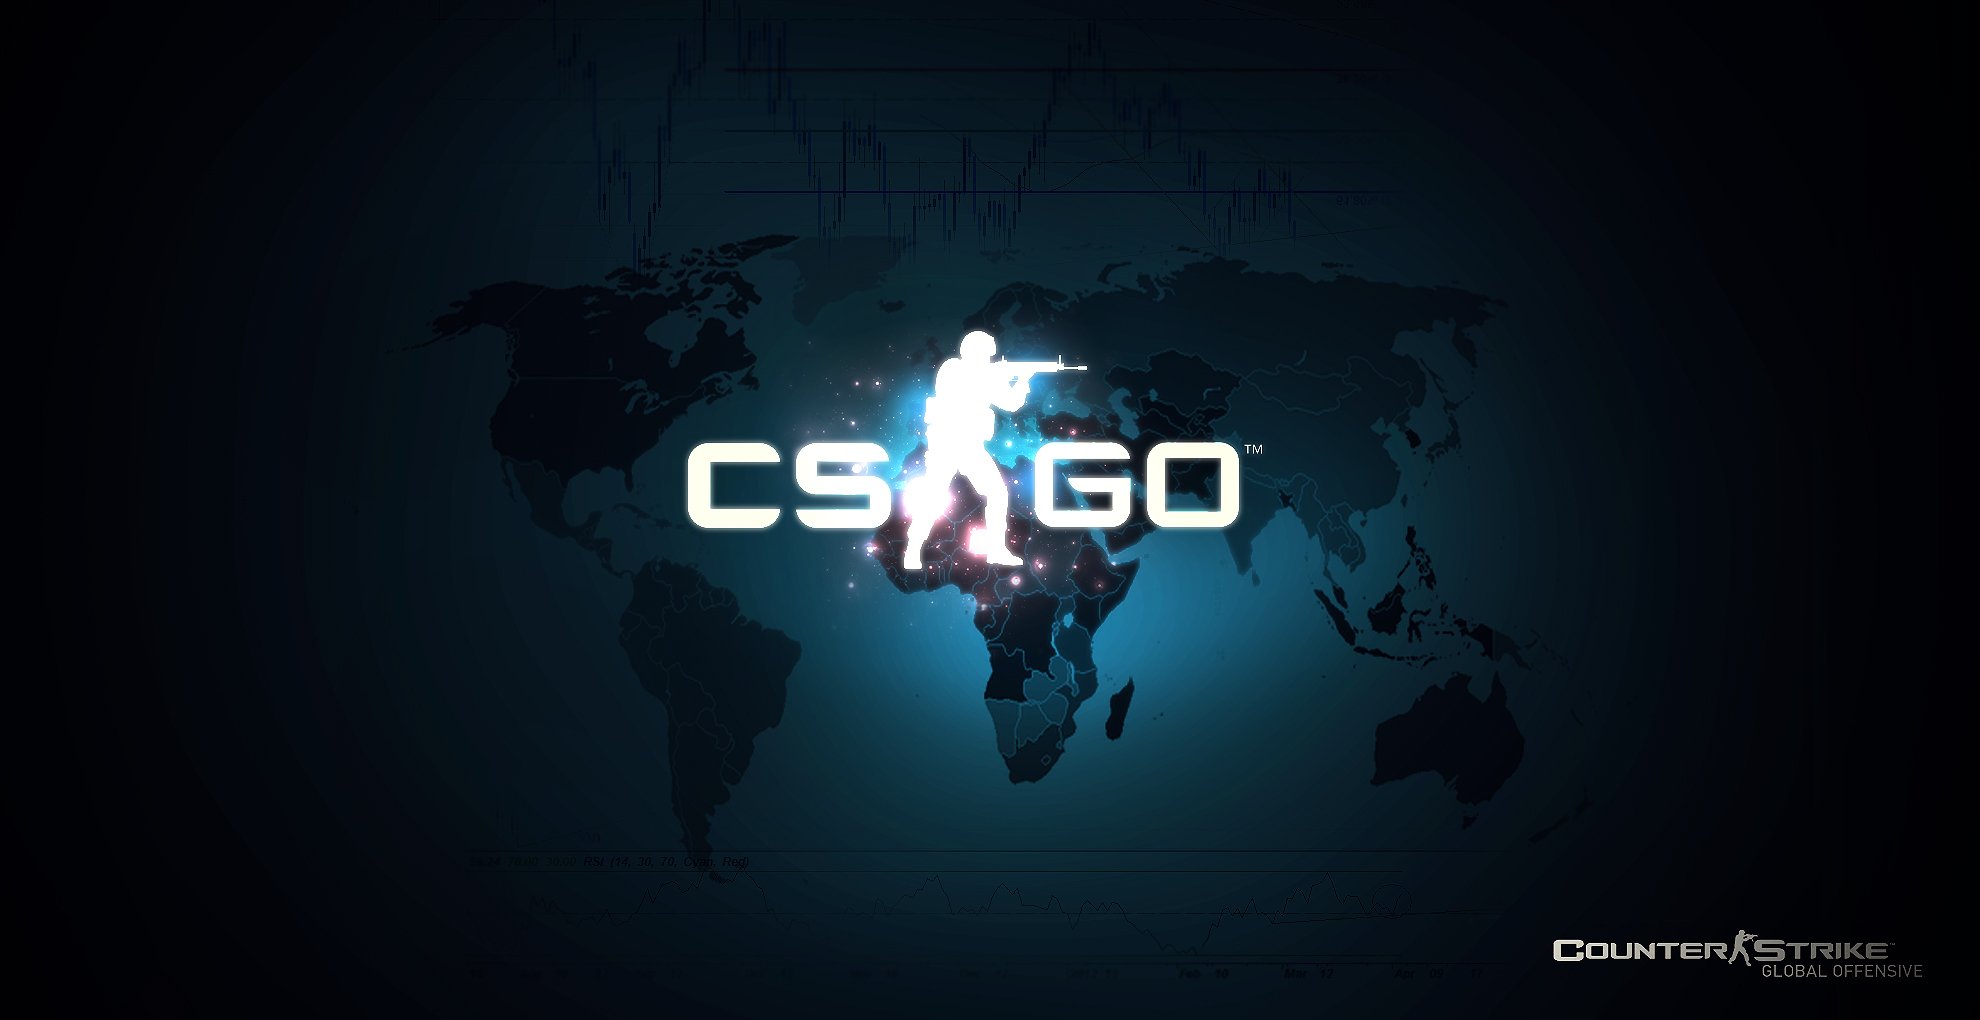 Counter Strike: Global Offensive CSGO Fondo de pantalla ID ...